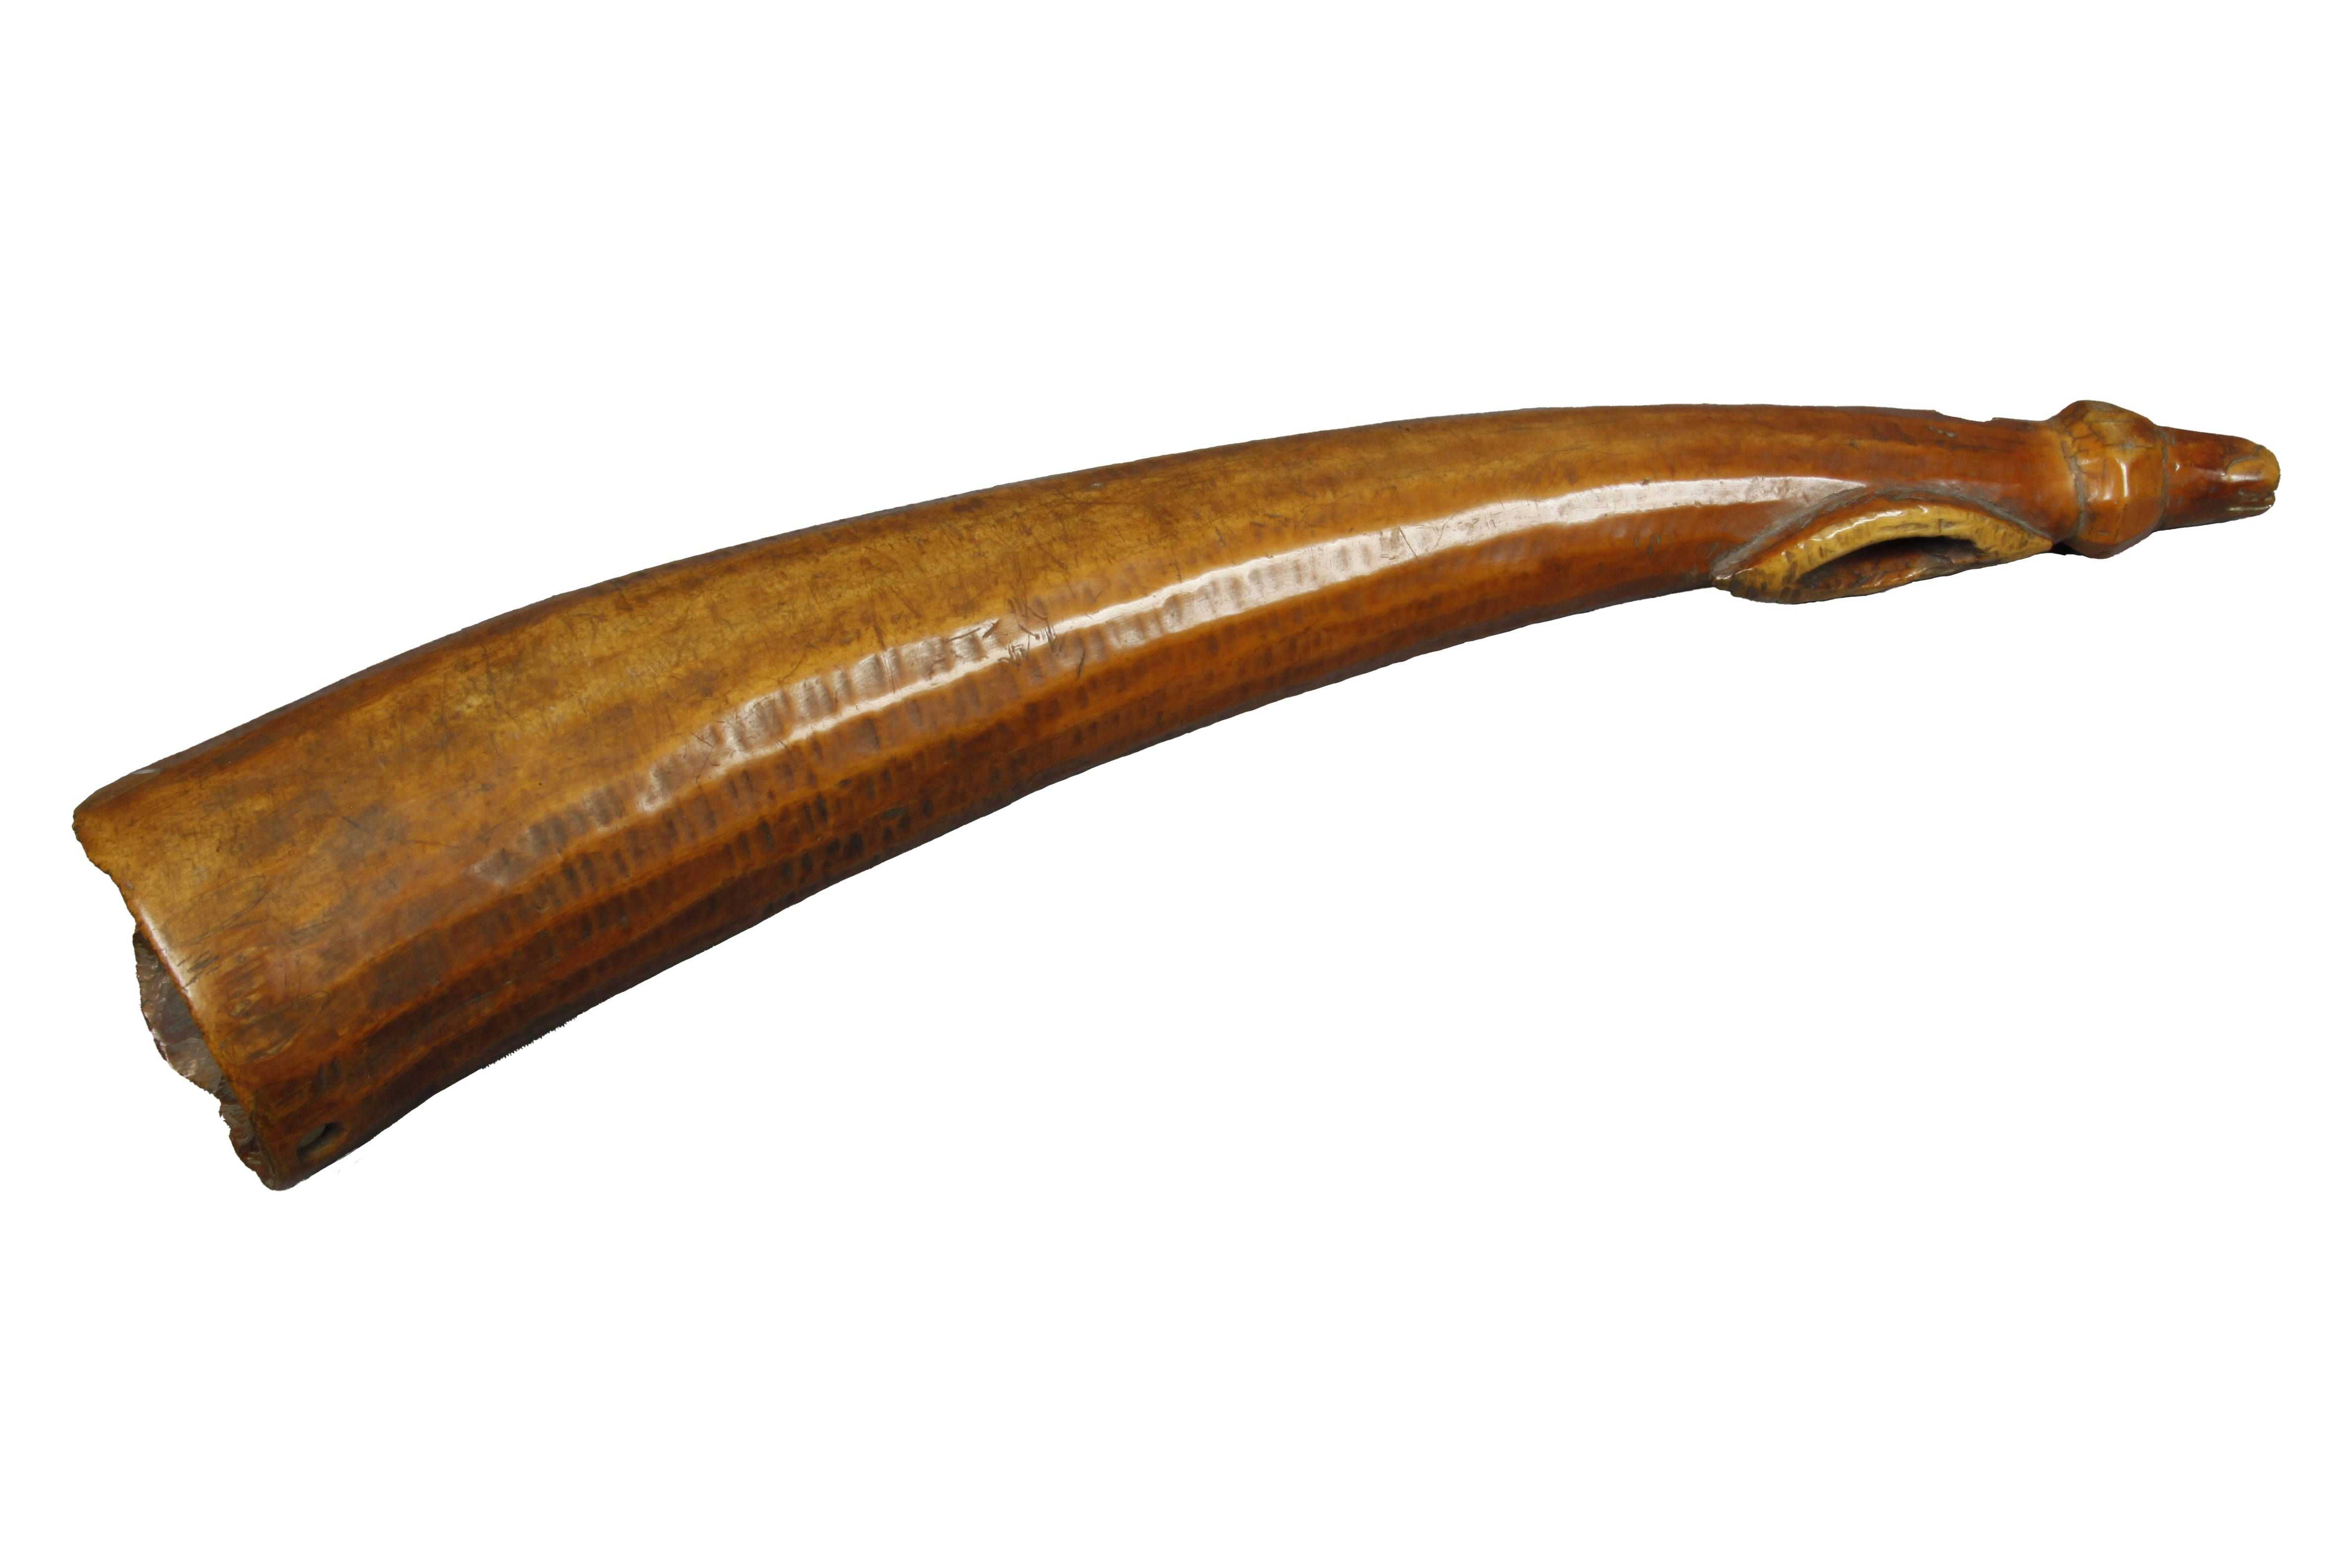 Photograph of an Ivory Signal Horn